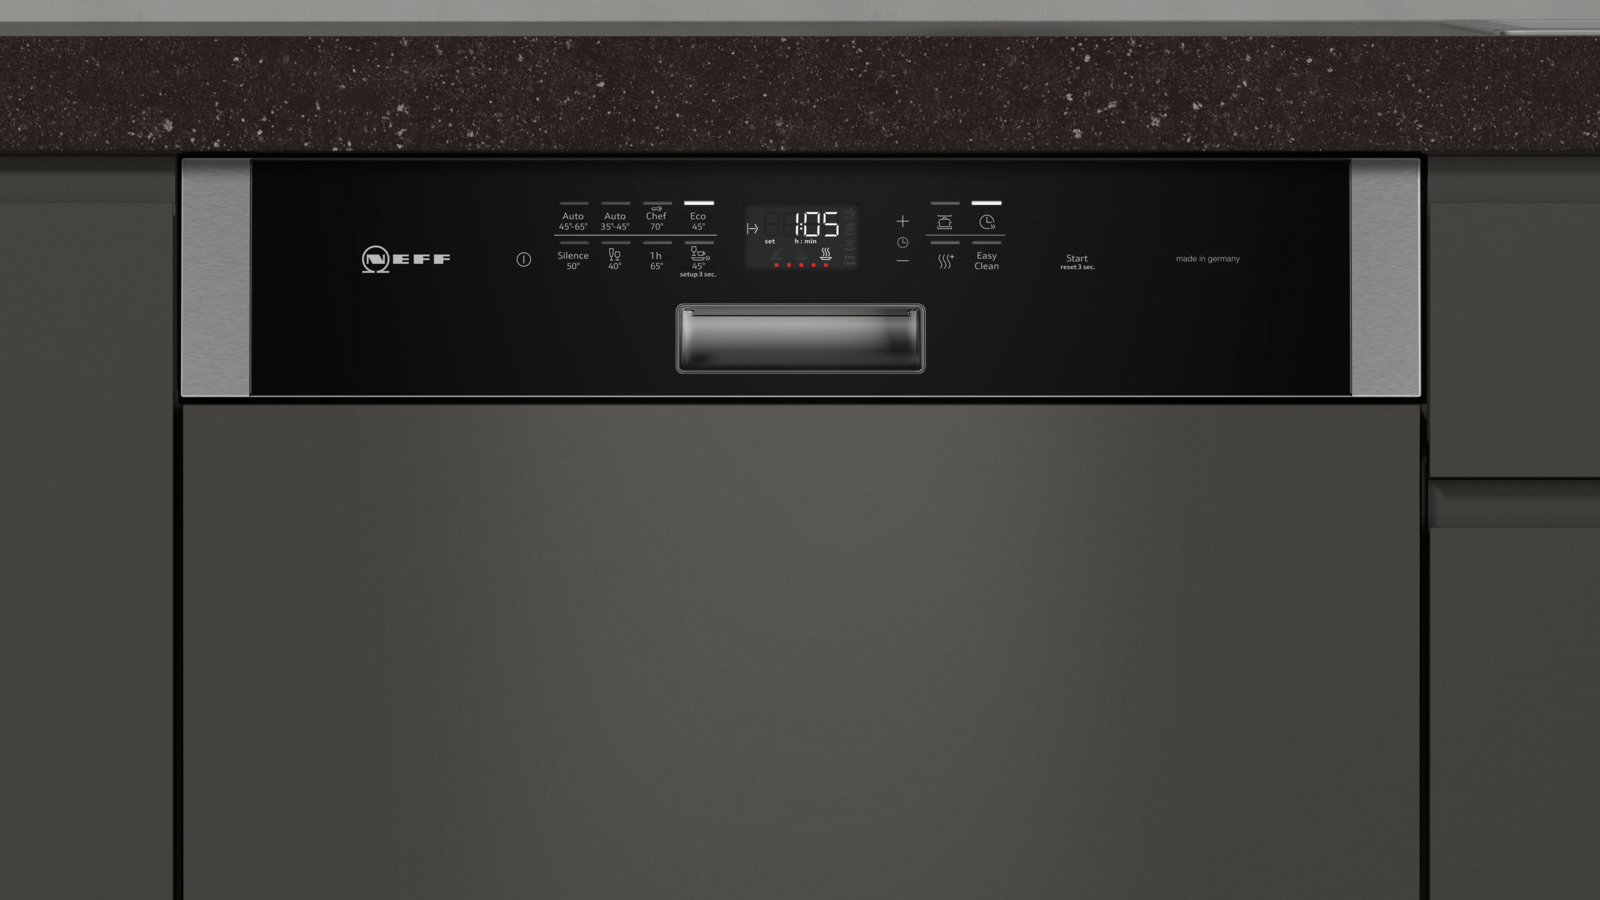 neff semi integrated dishwasher